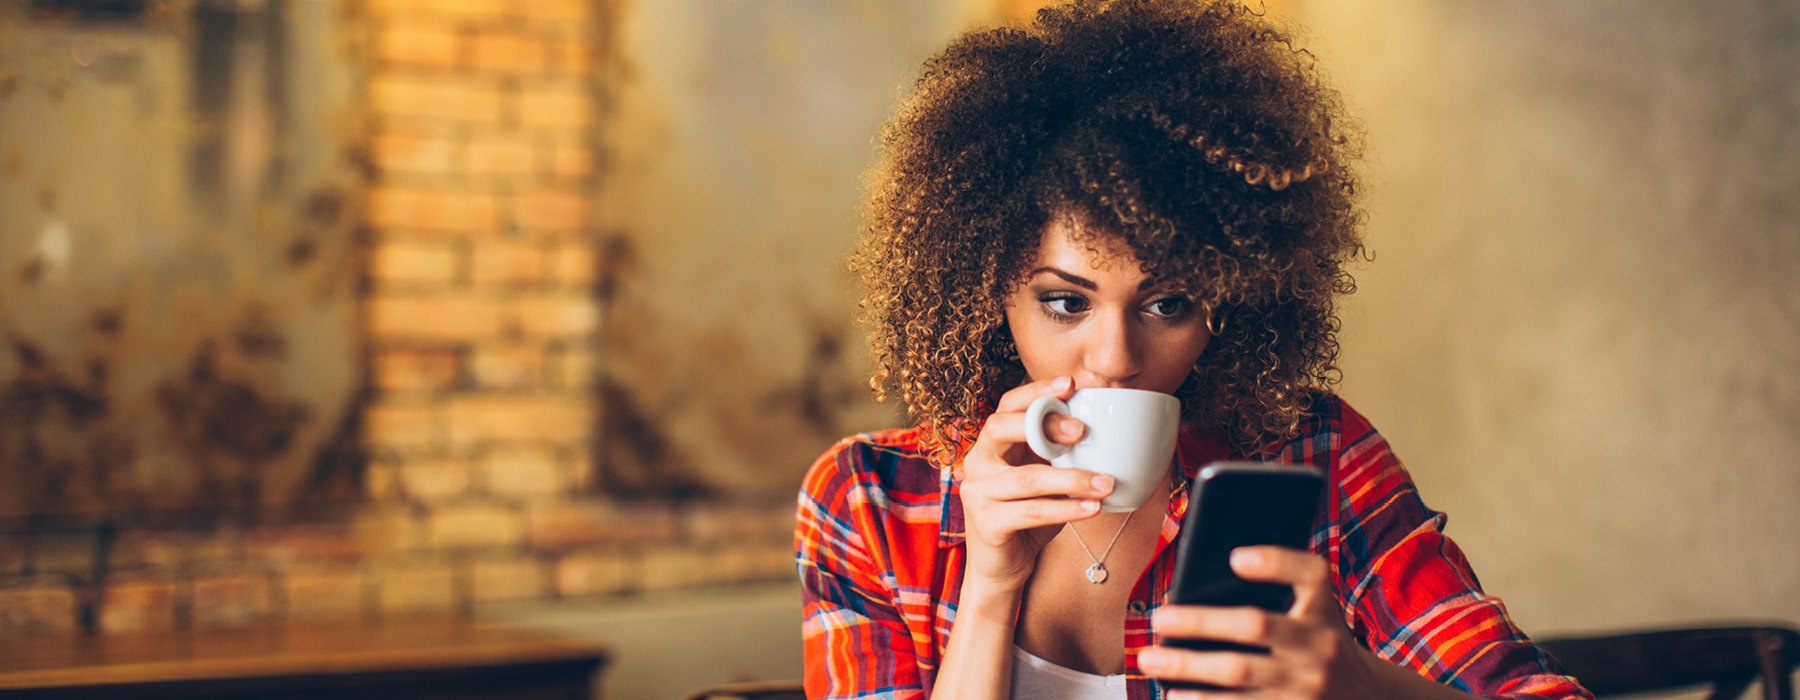 Woman drinking coffee on phone